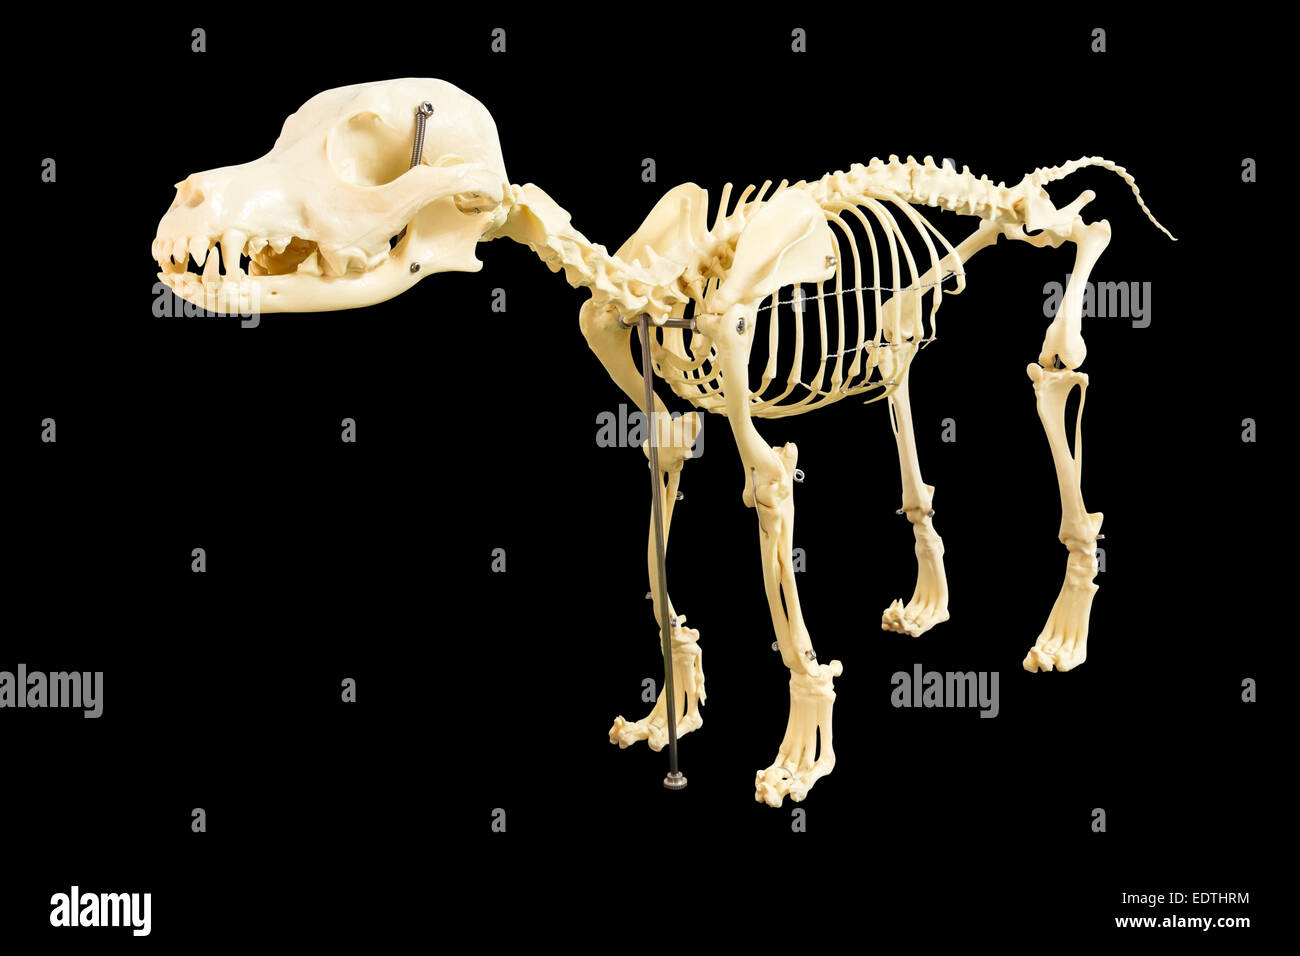 Dog skeleton model on white blackground Stock Photo